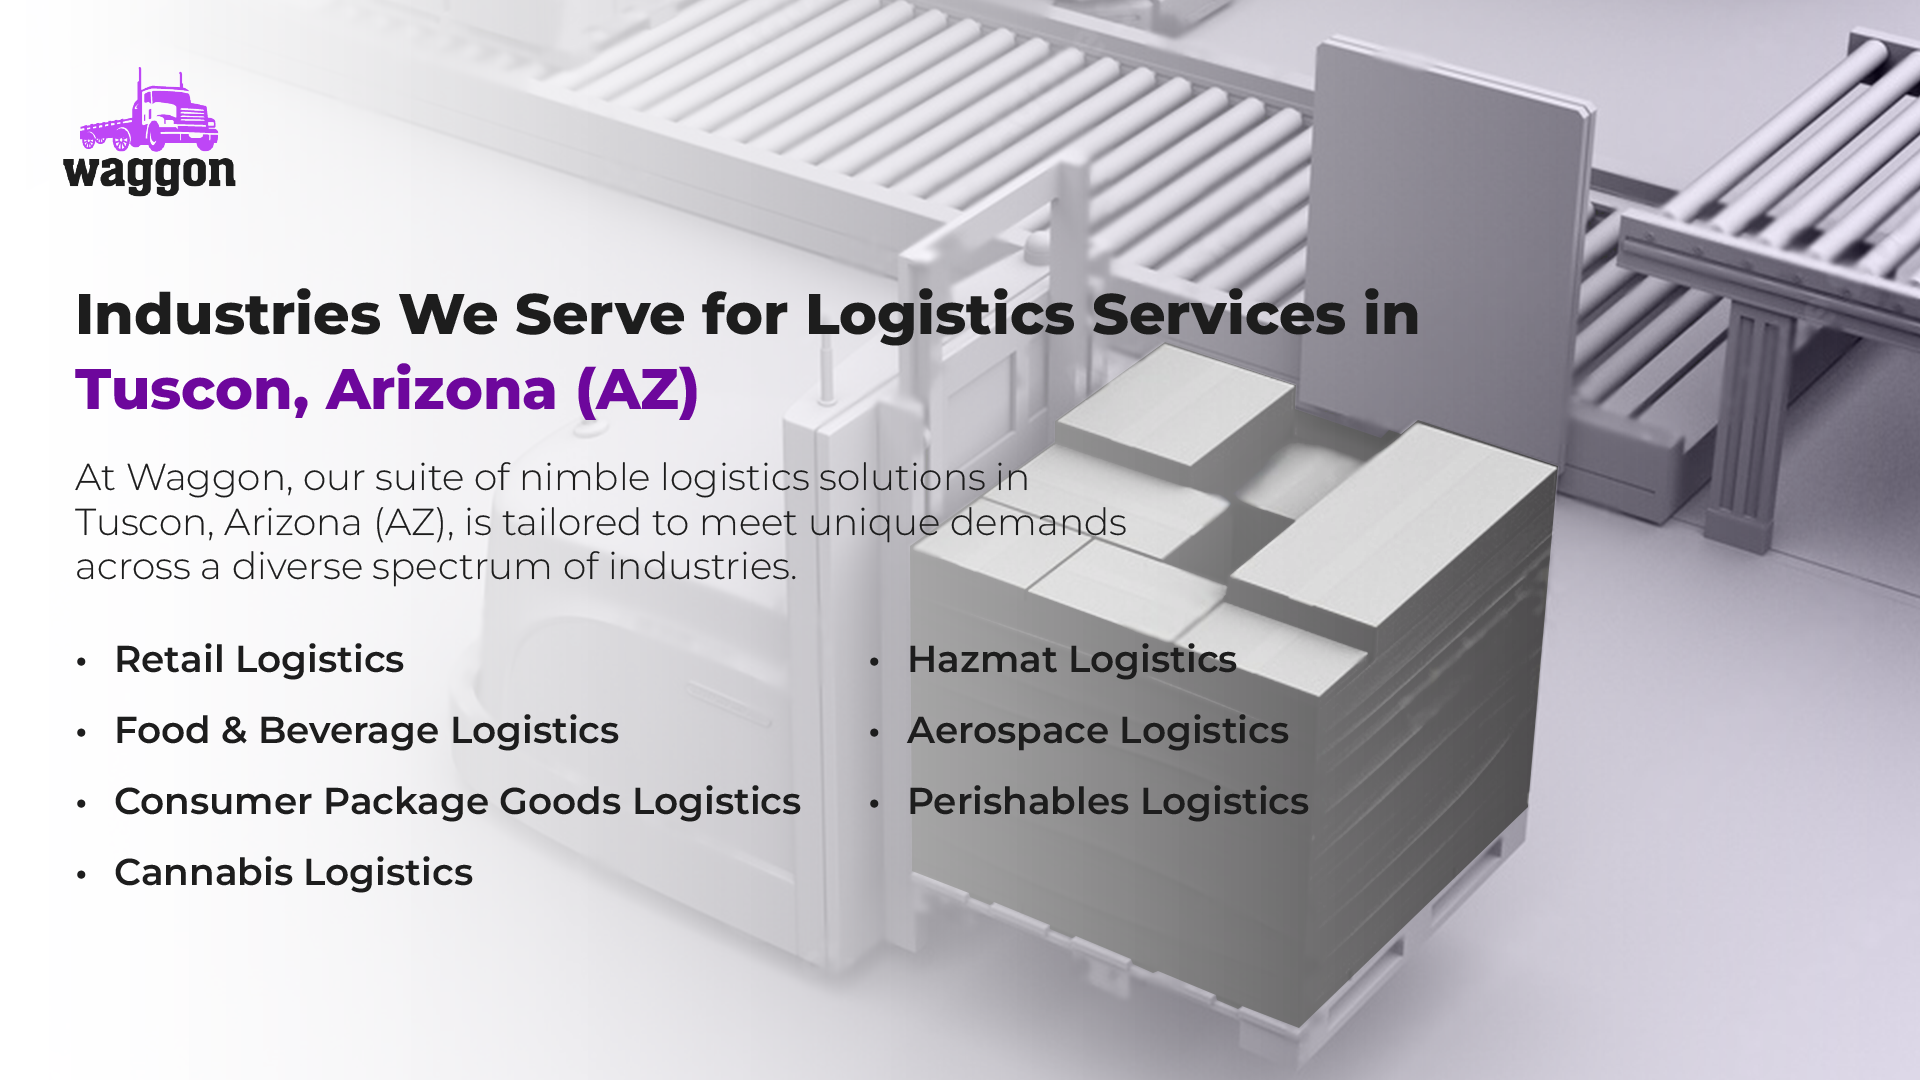 Industries We Serve for Logistics Services in Tucson, Arizona (AZ)